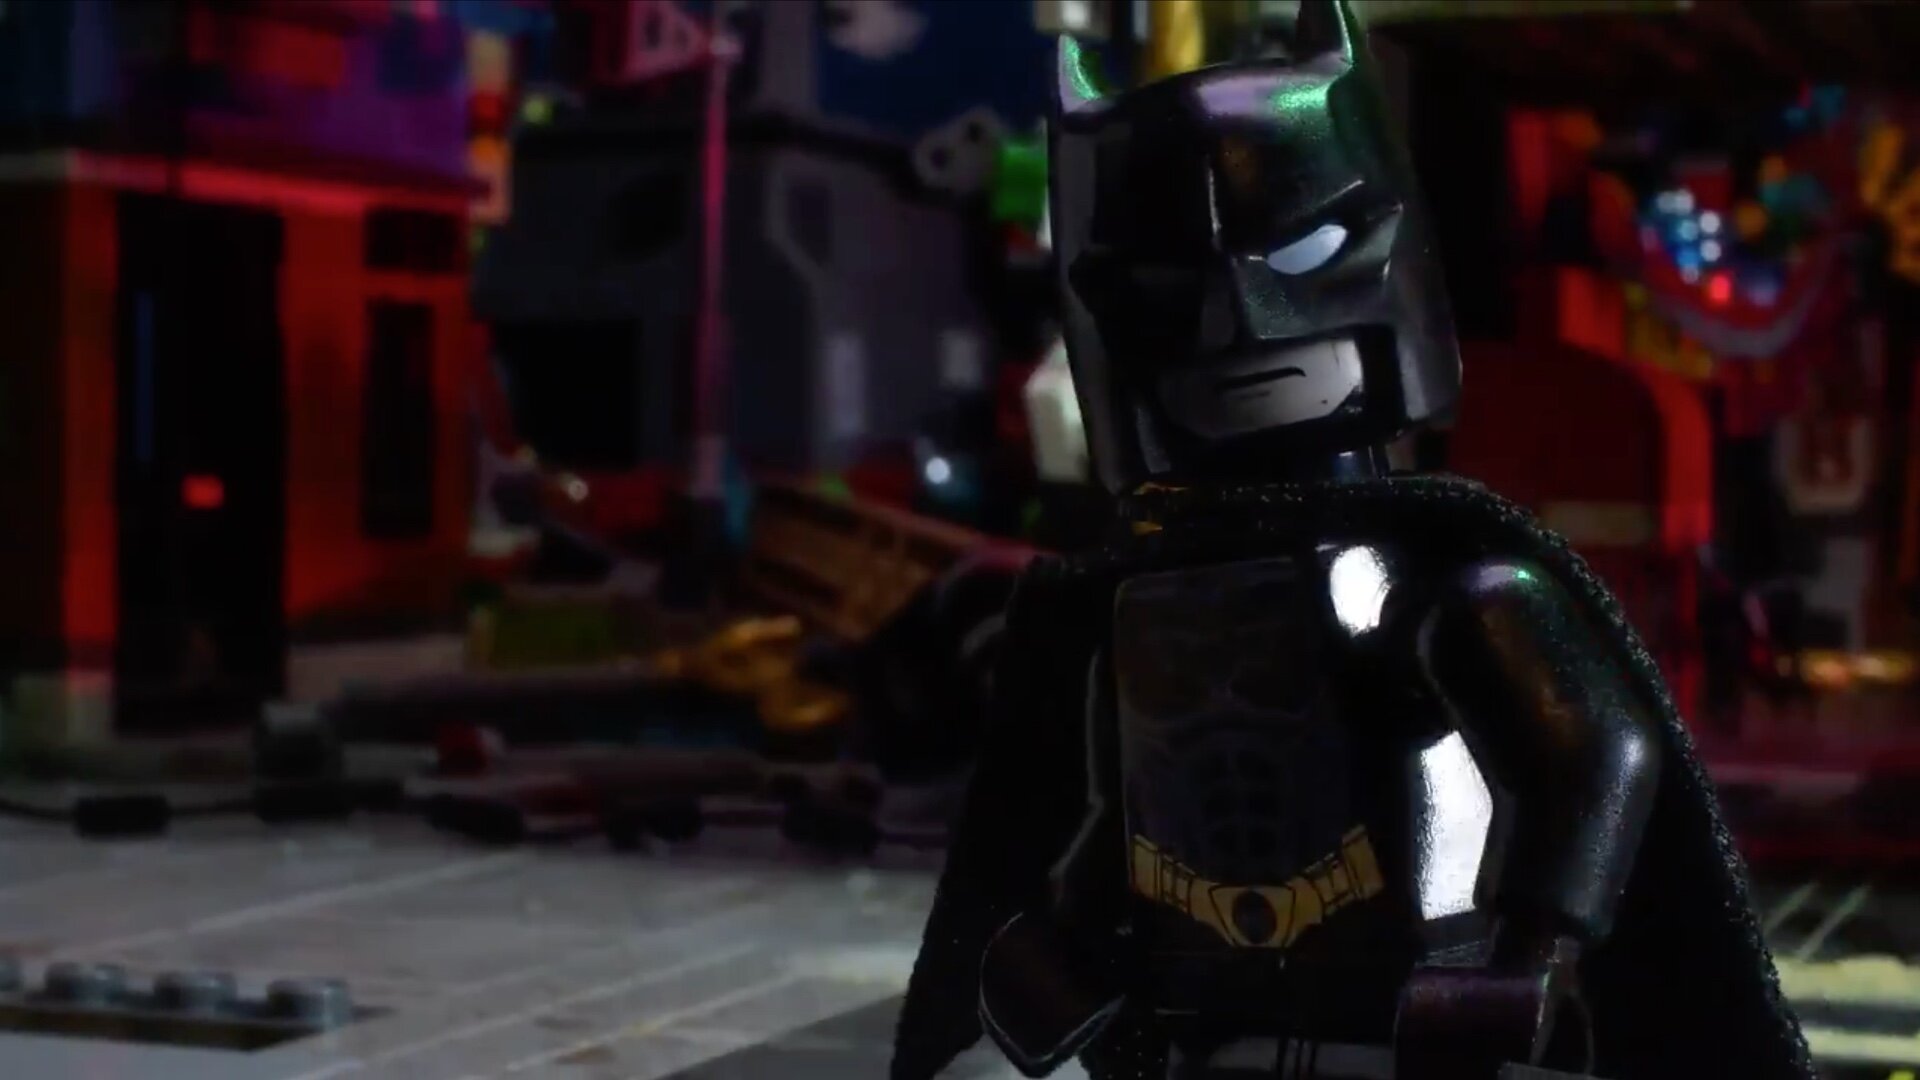 The Batman Fan Recreates Trailer in LEGO Minifigures